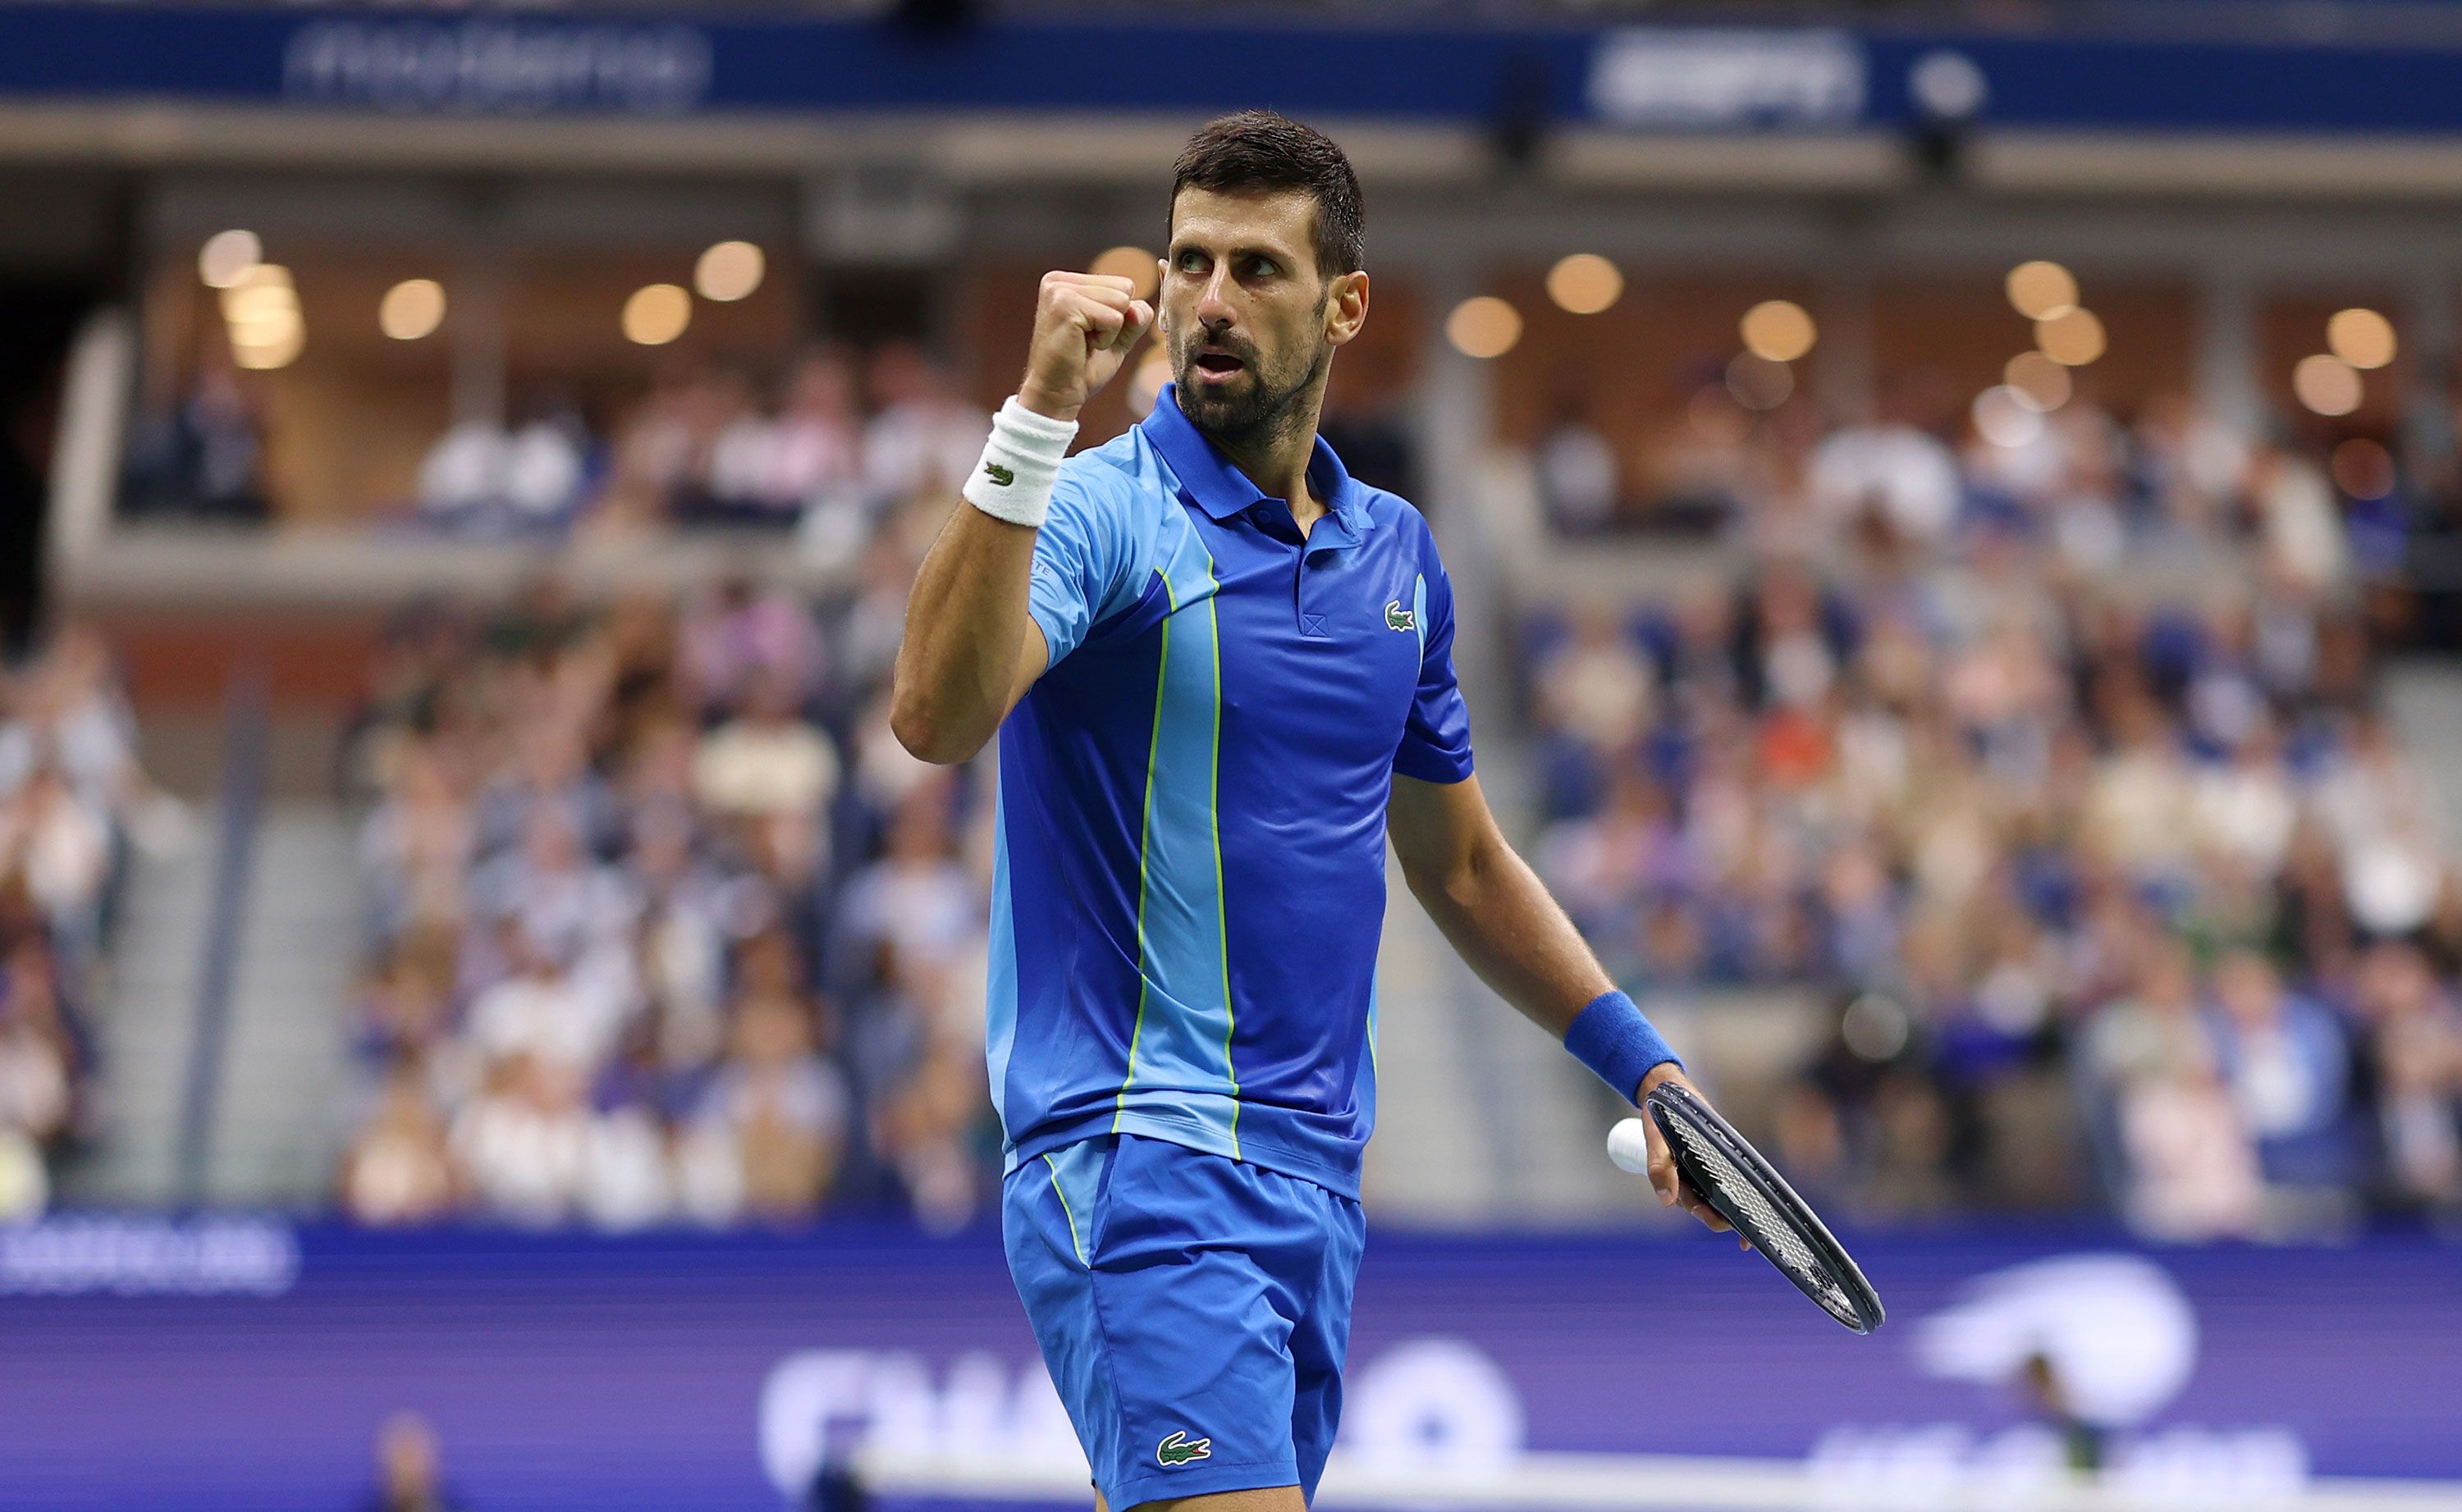 US Open men's final live tracker: Novak Djokovic faces Daniil